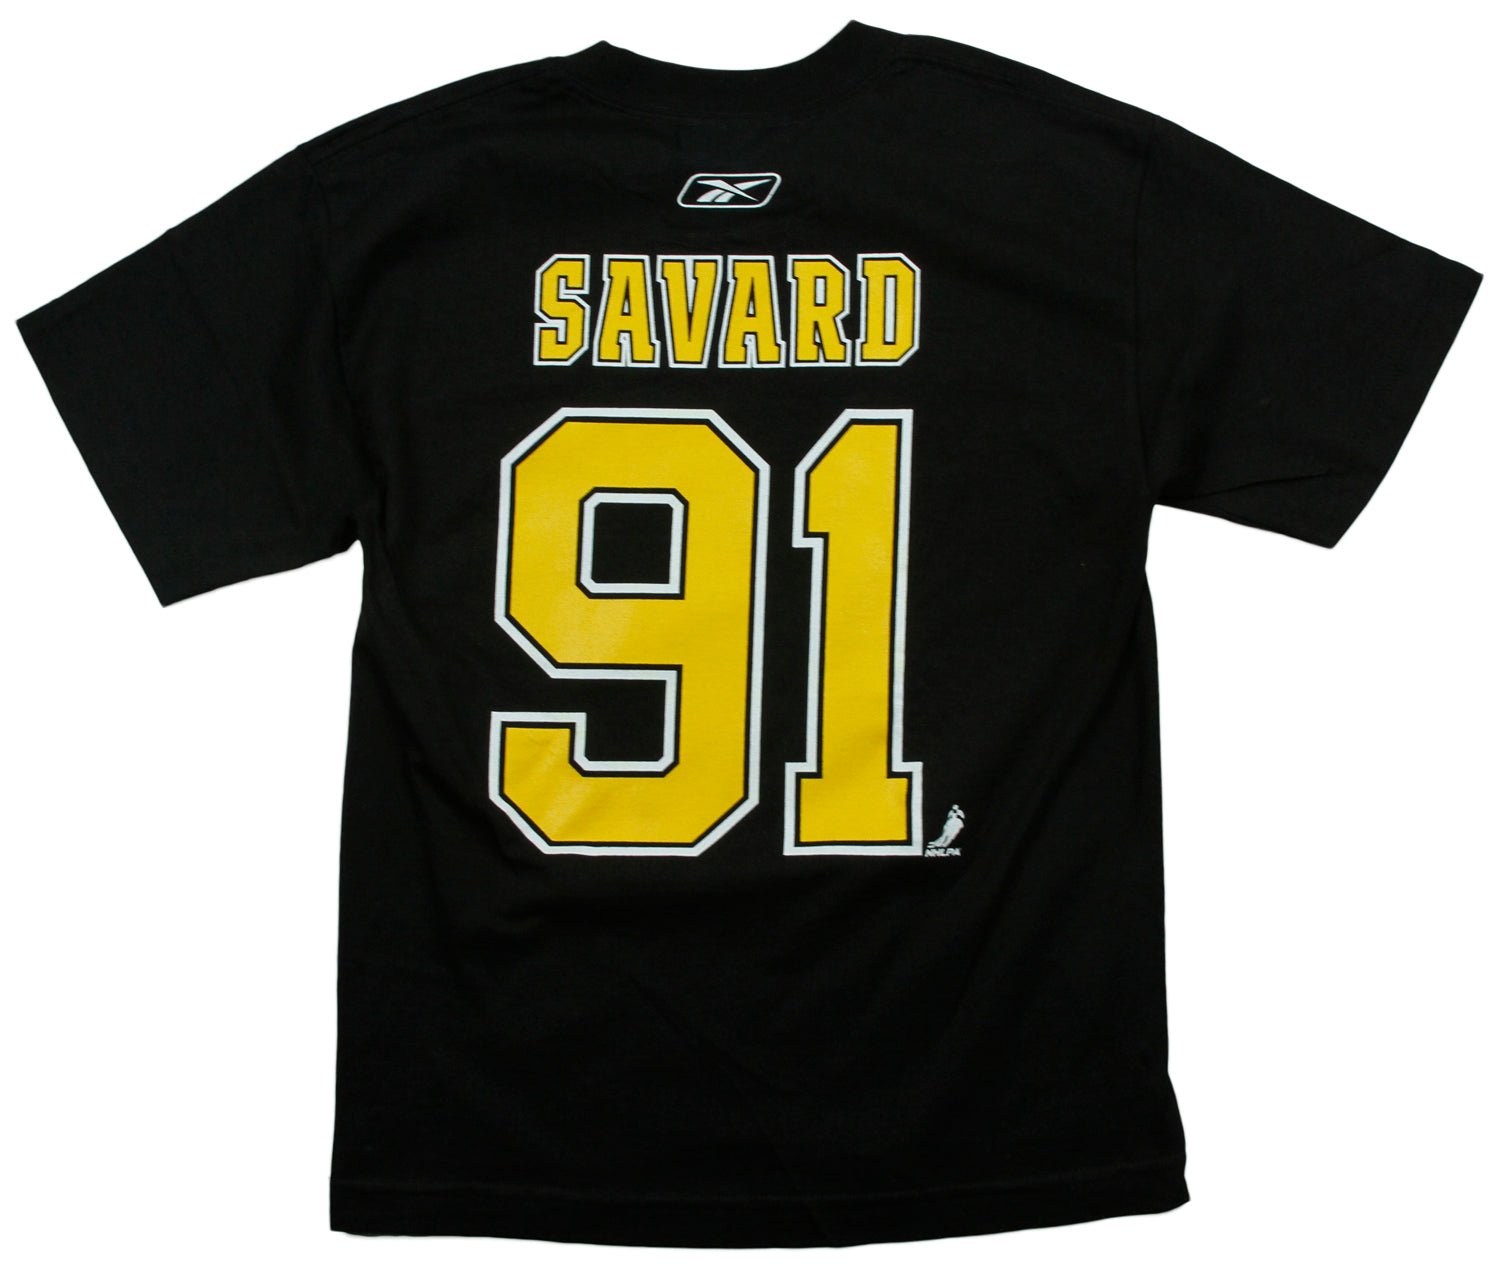 Reebok NHL Youth Boston Bruins Marc Savard Short Sleeve Player T-Shirt - Black - Medium (10-12)